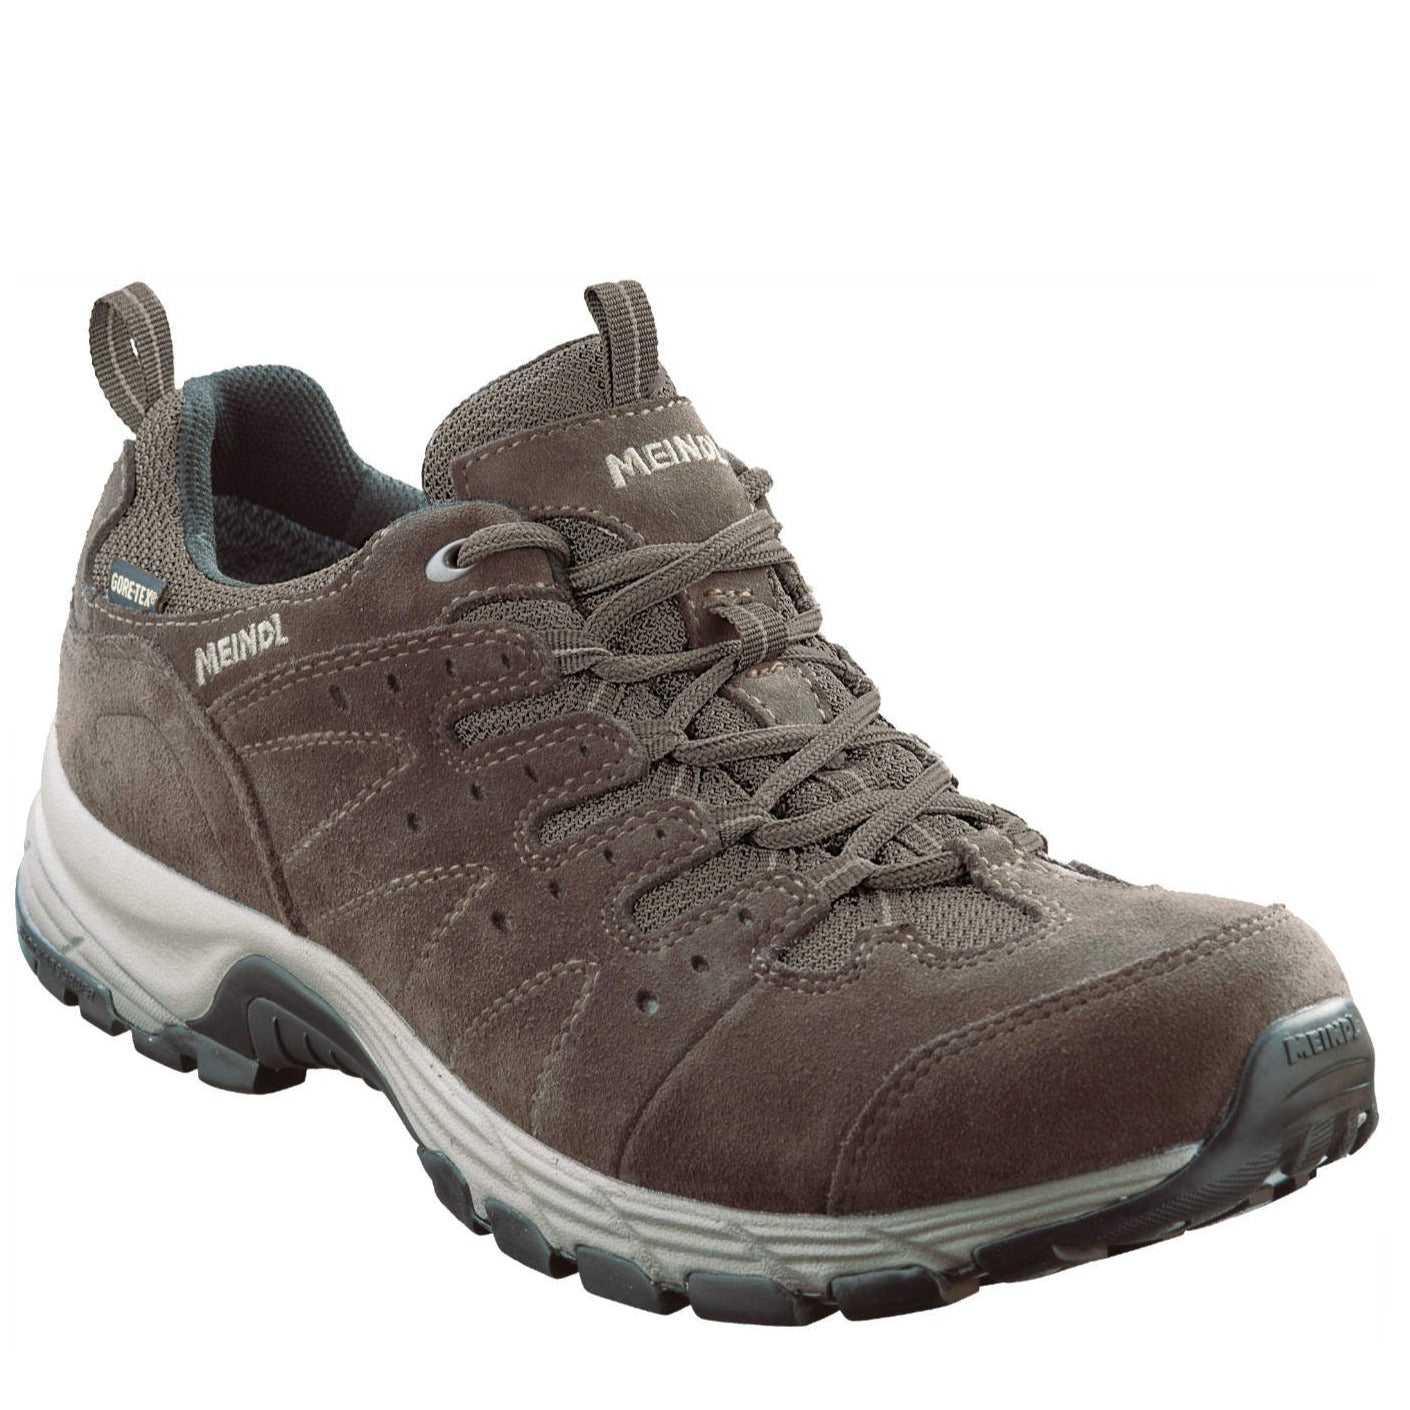 Meindl Rapide Men's GTX Comfort Fit Walking Shoes - Brown